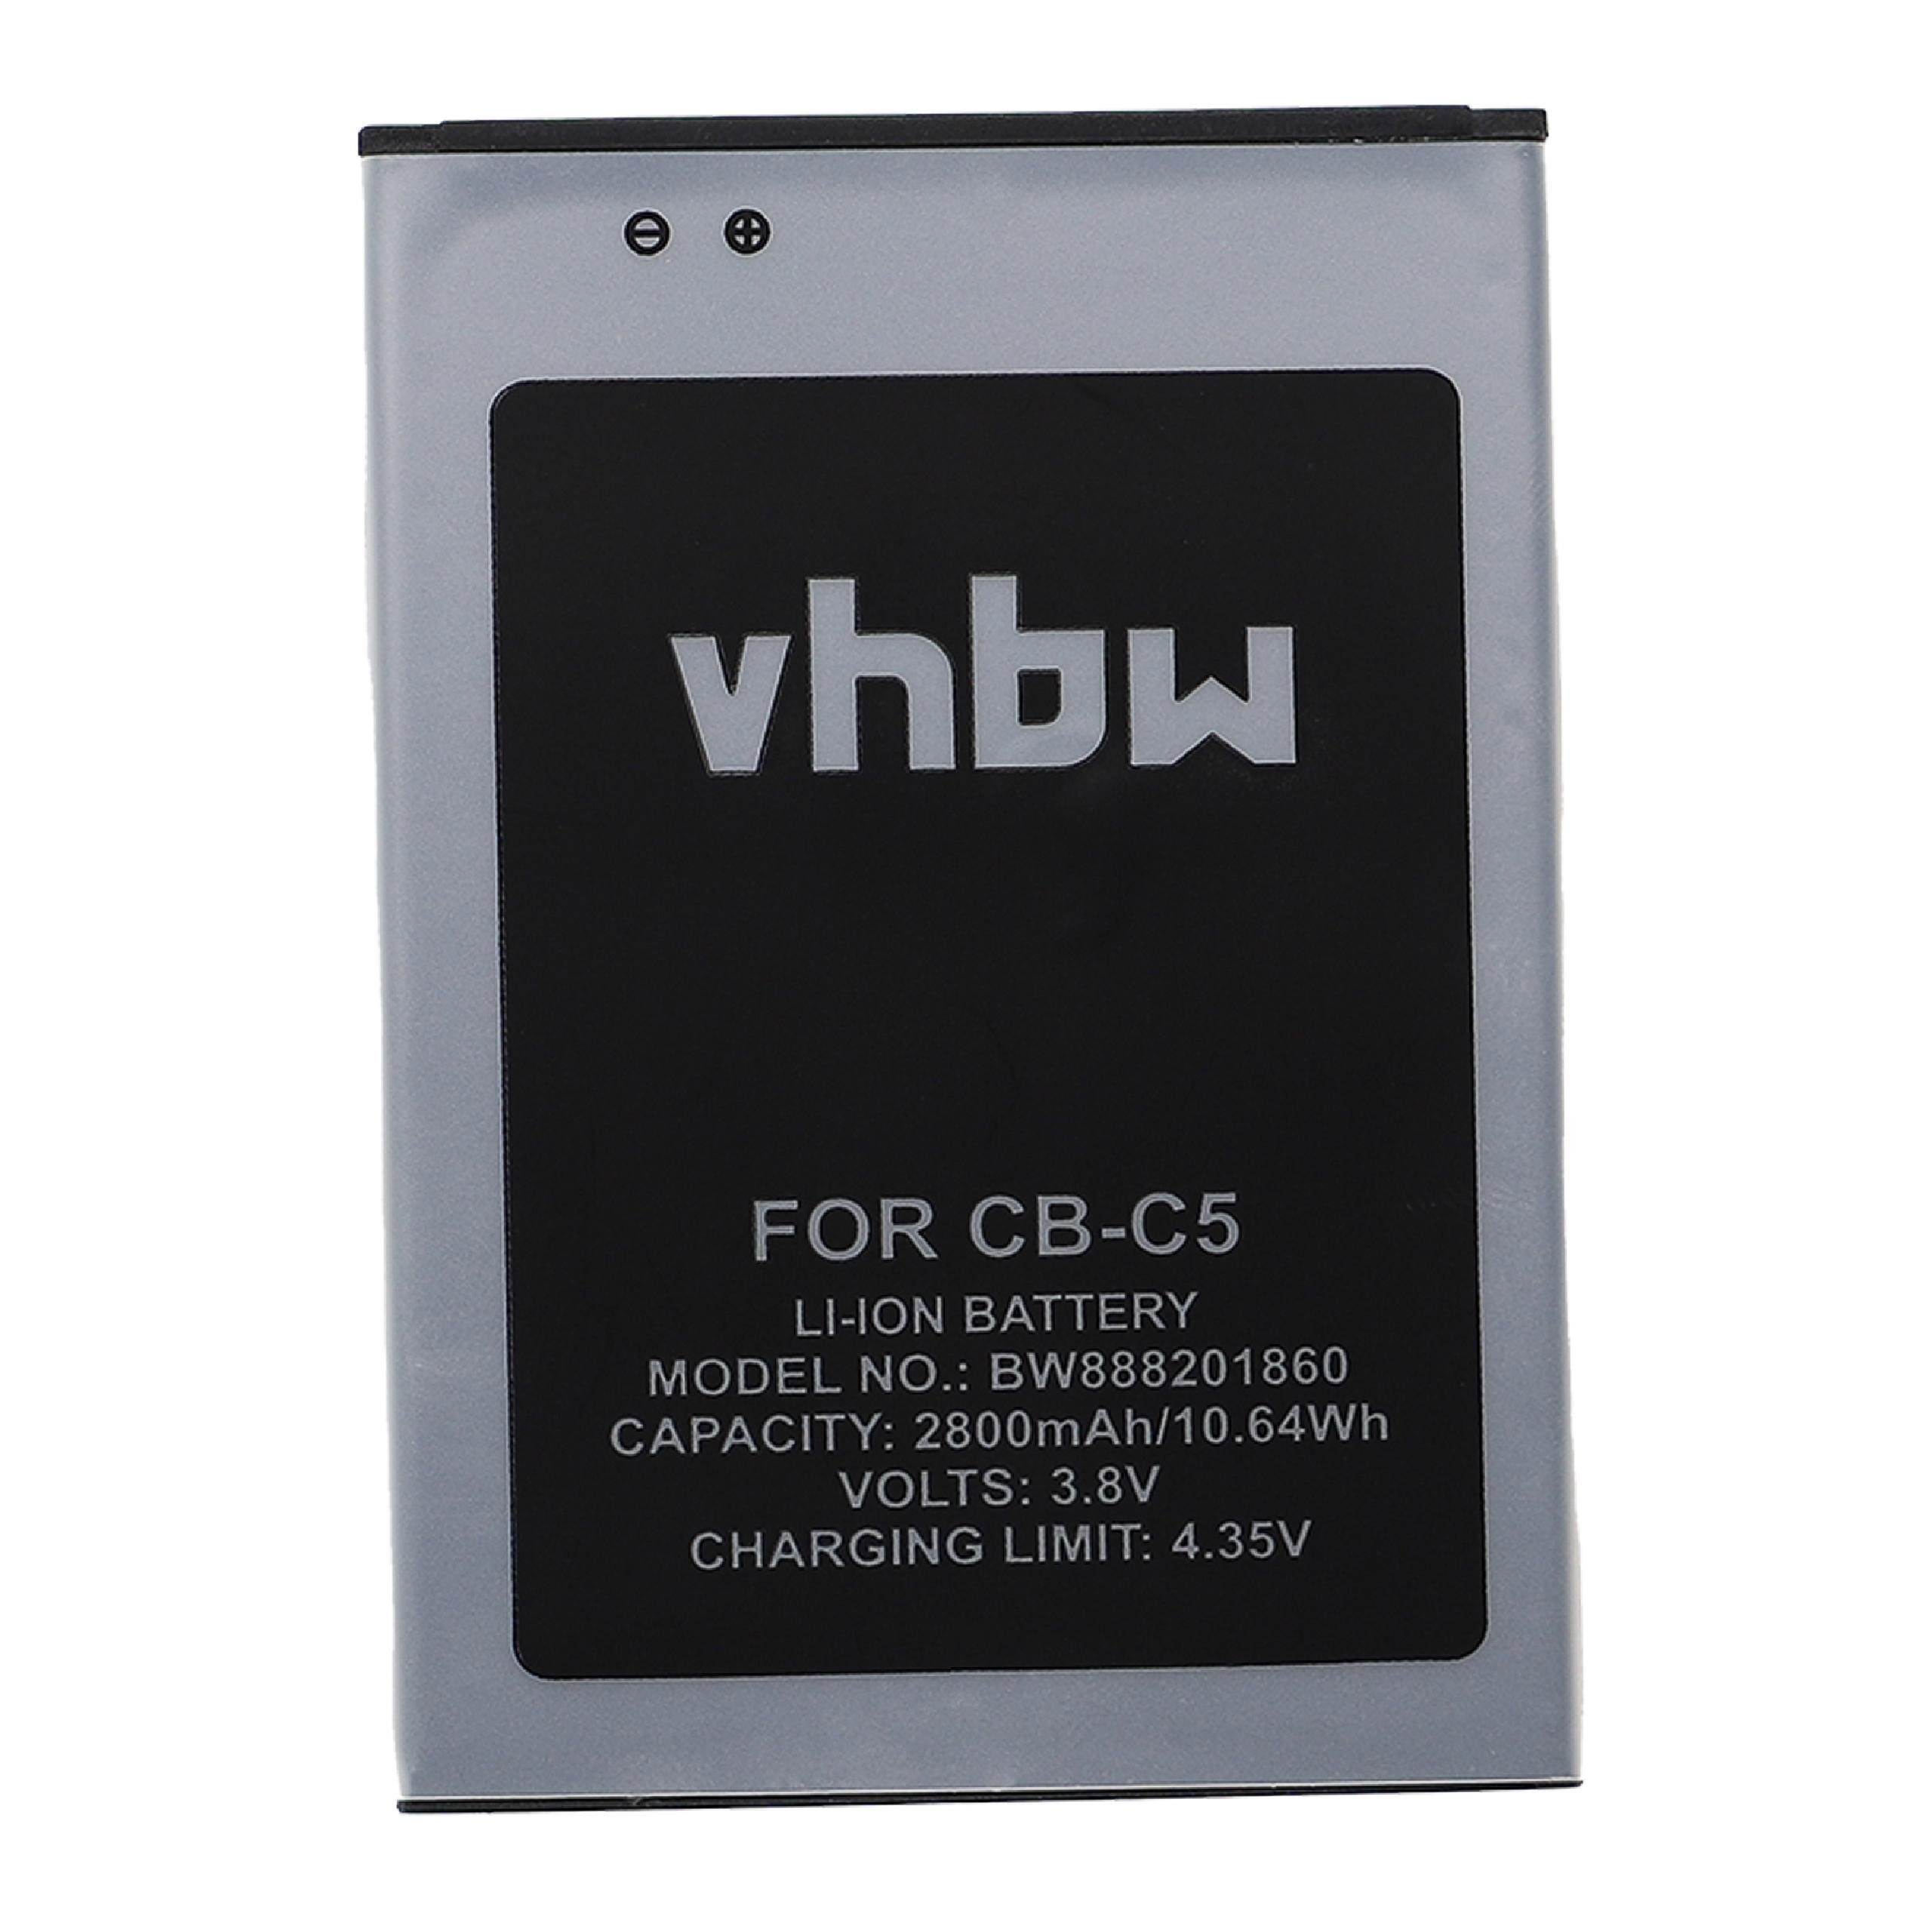 C5 Ersatz für Cubot (3,8 V) vhbw Li-Ion mAh 2800 Smartphone-Akku für